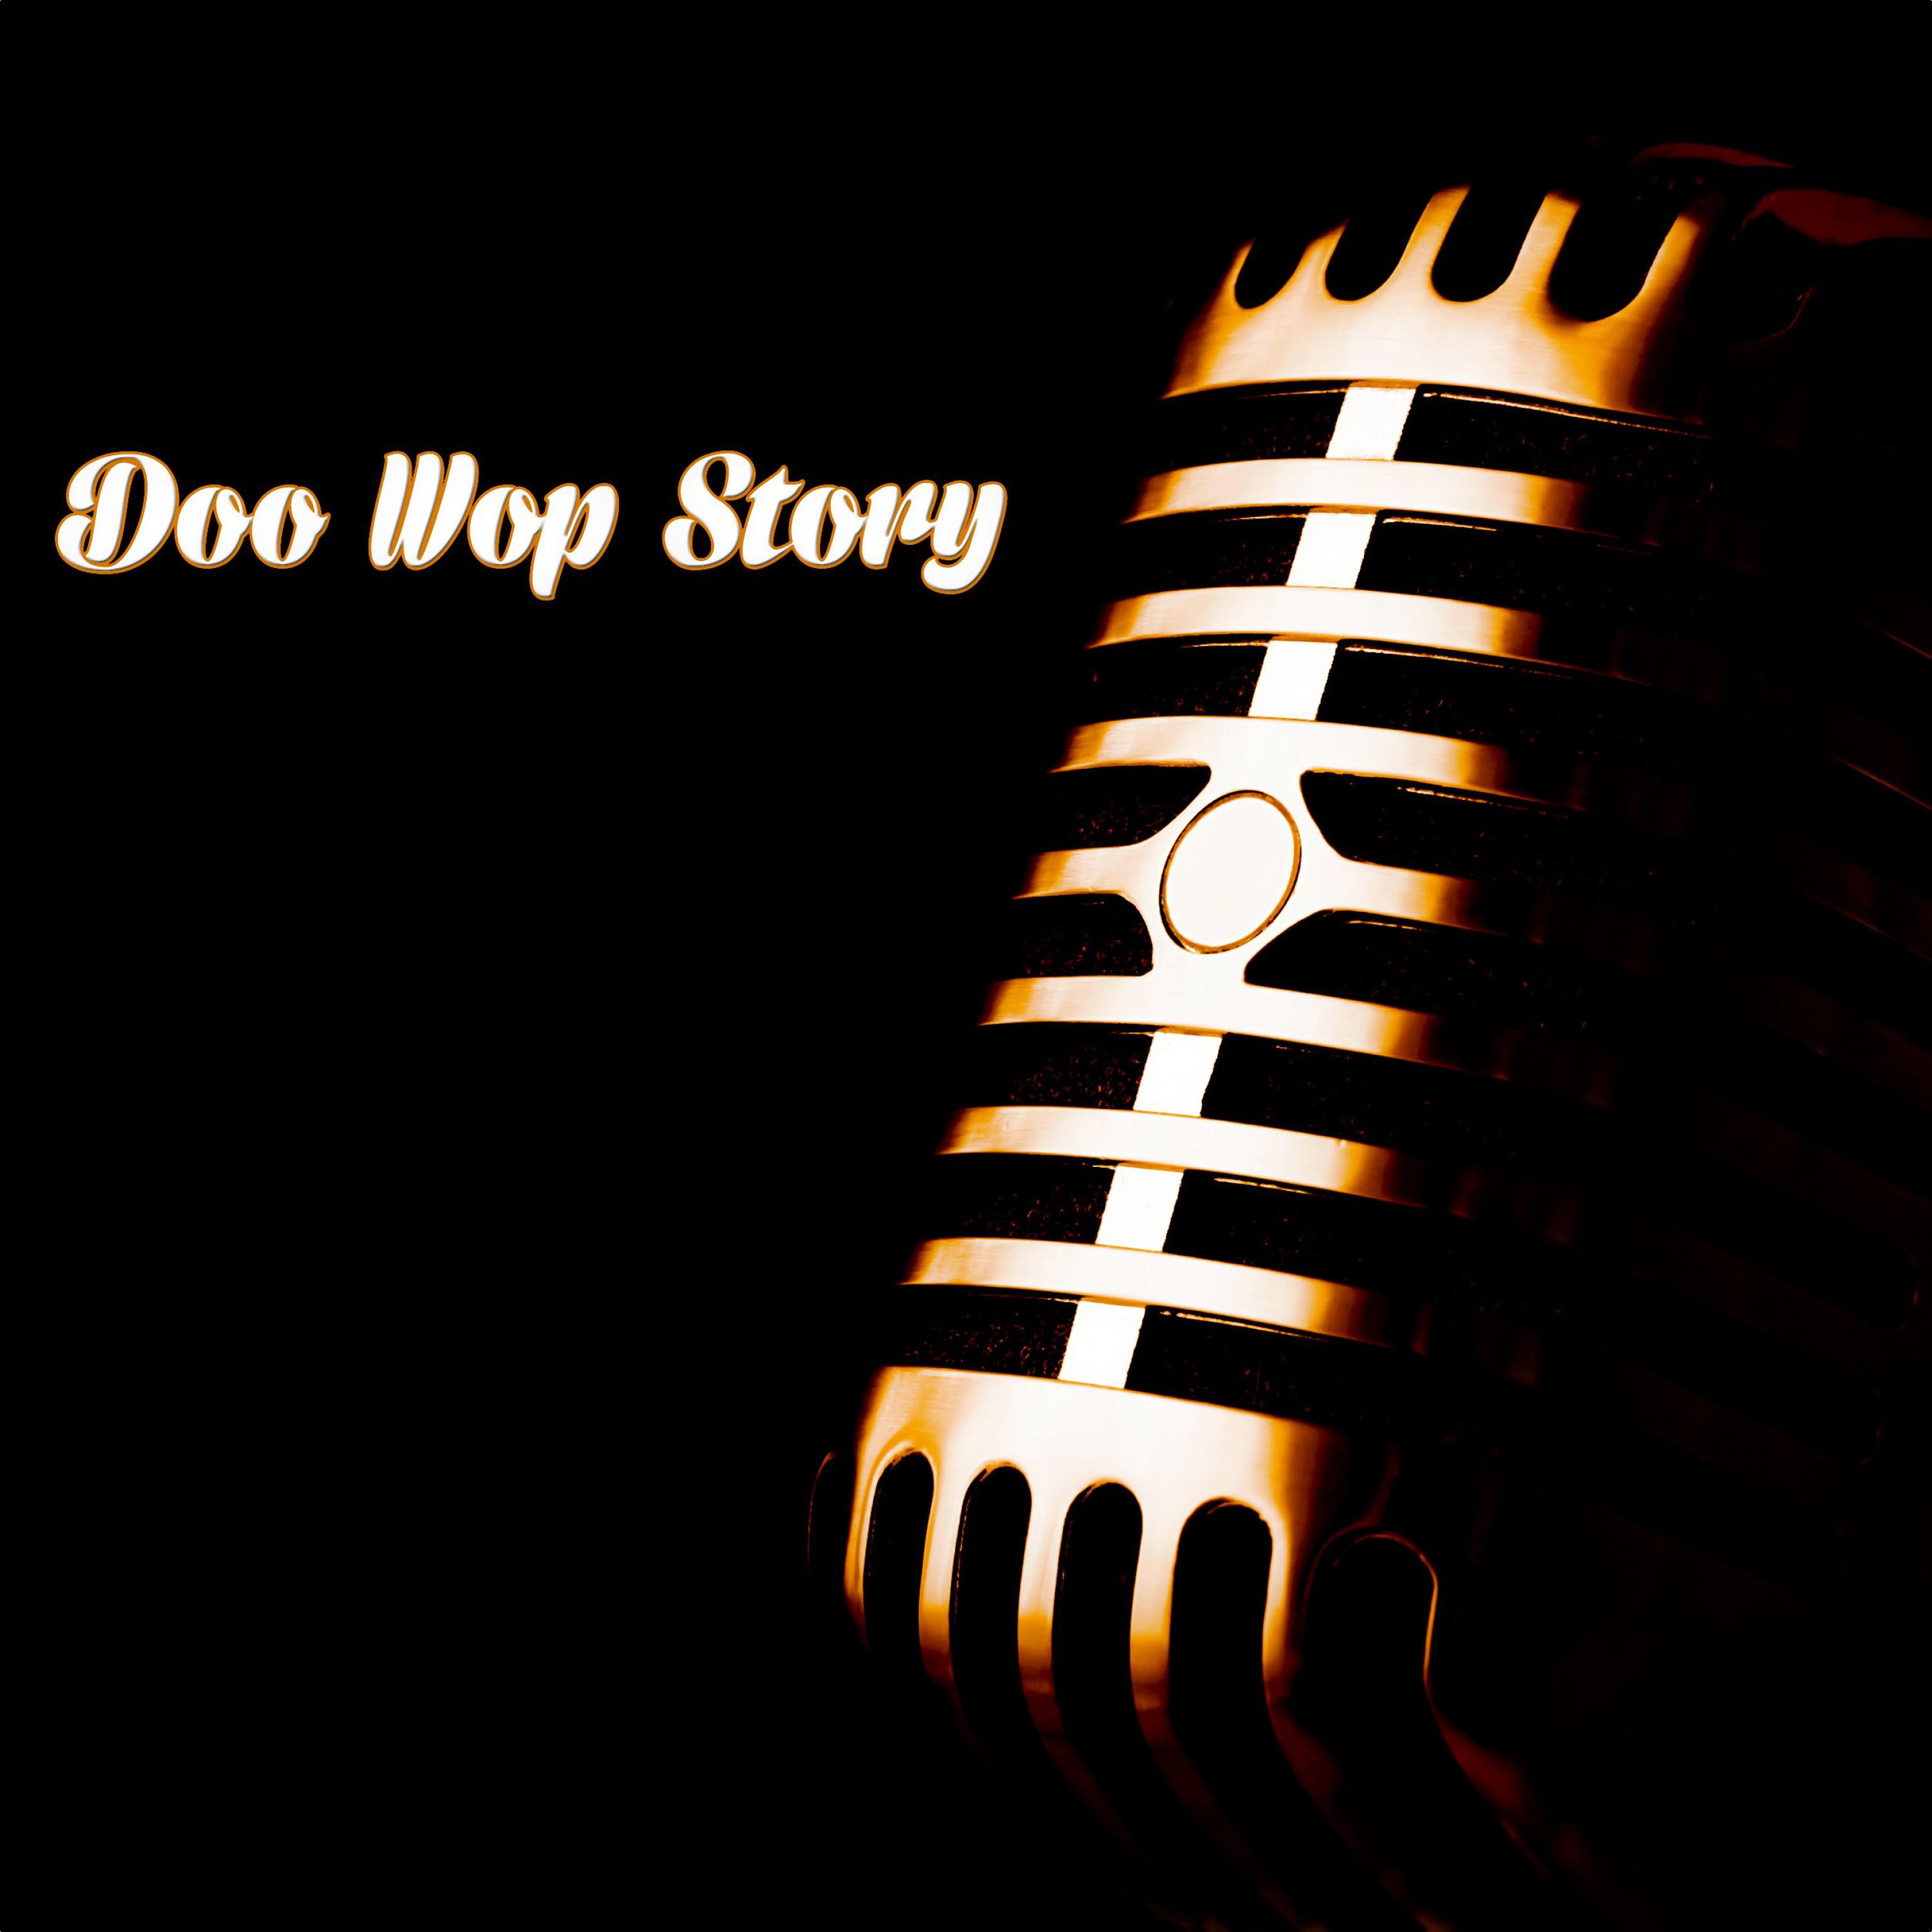 Doo Wop Story